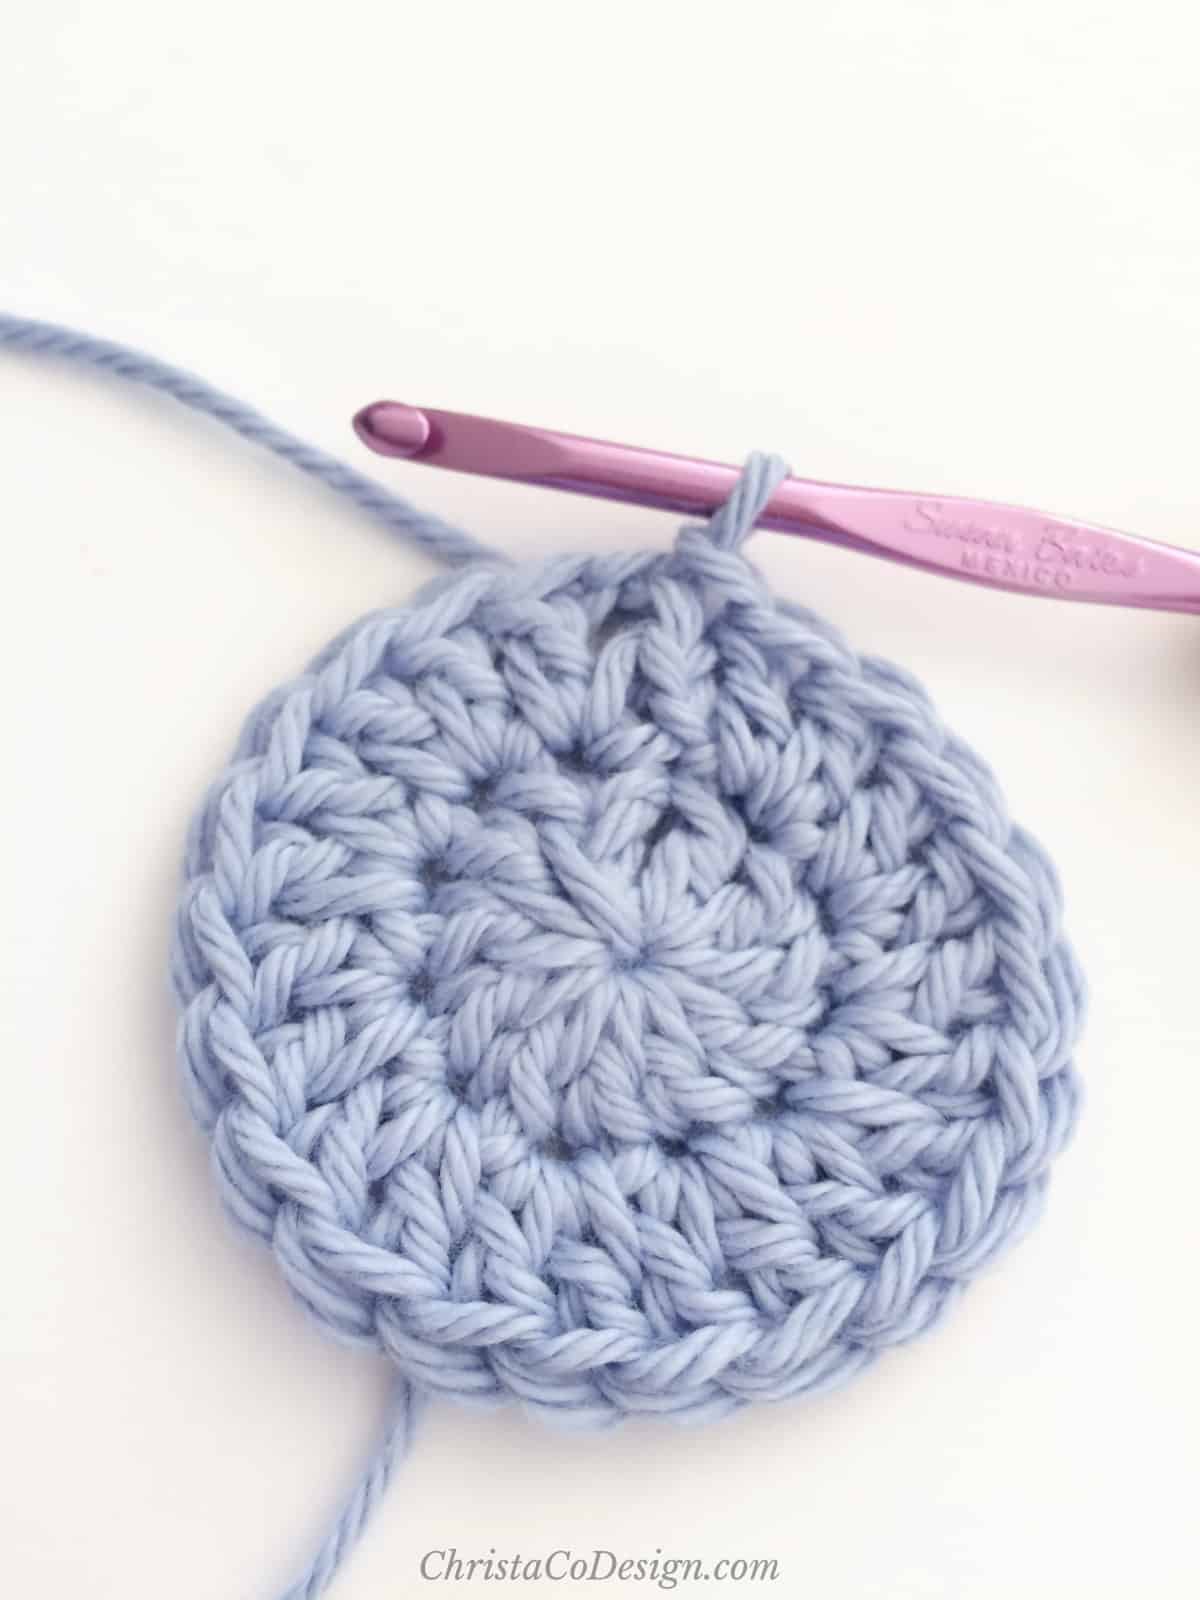 Magic circle crochet circle in blue yarn.